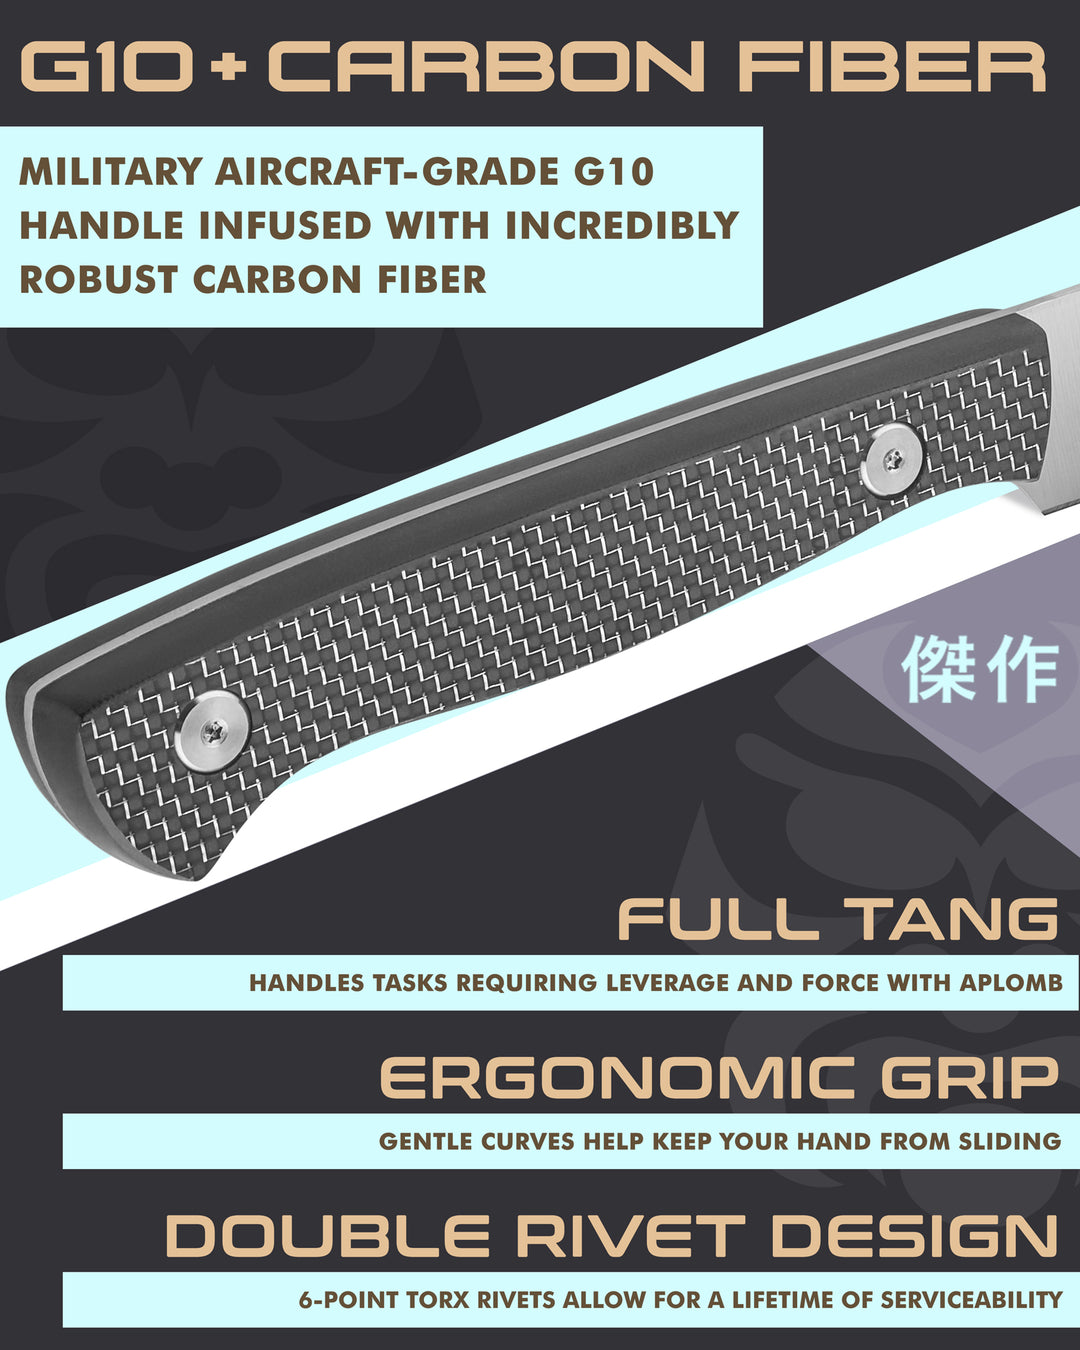 Kessaku Senshi Carving Knife handle features: Carbon fiber infused G10 handle, full tang, ergonomic grip, double torx rivet design